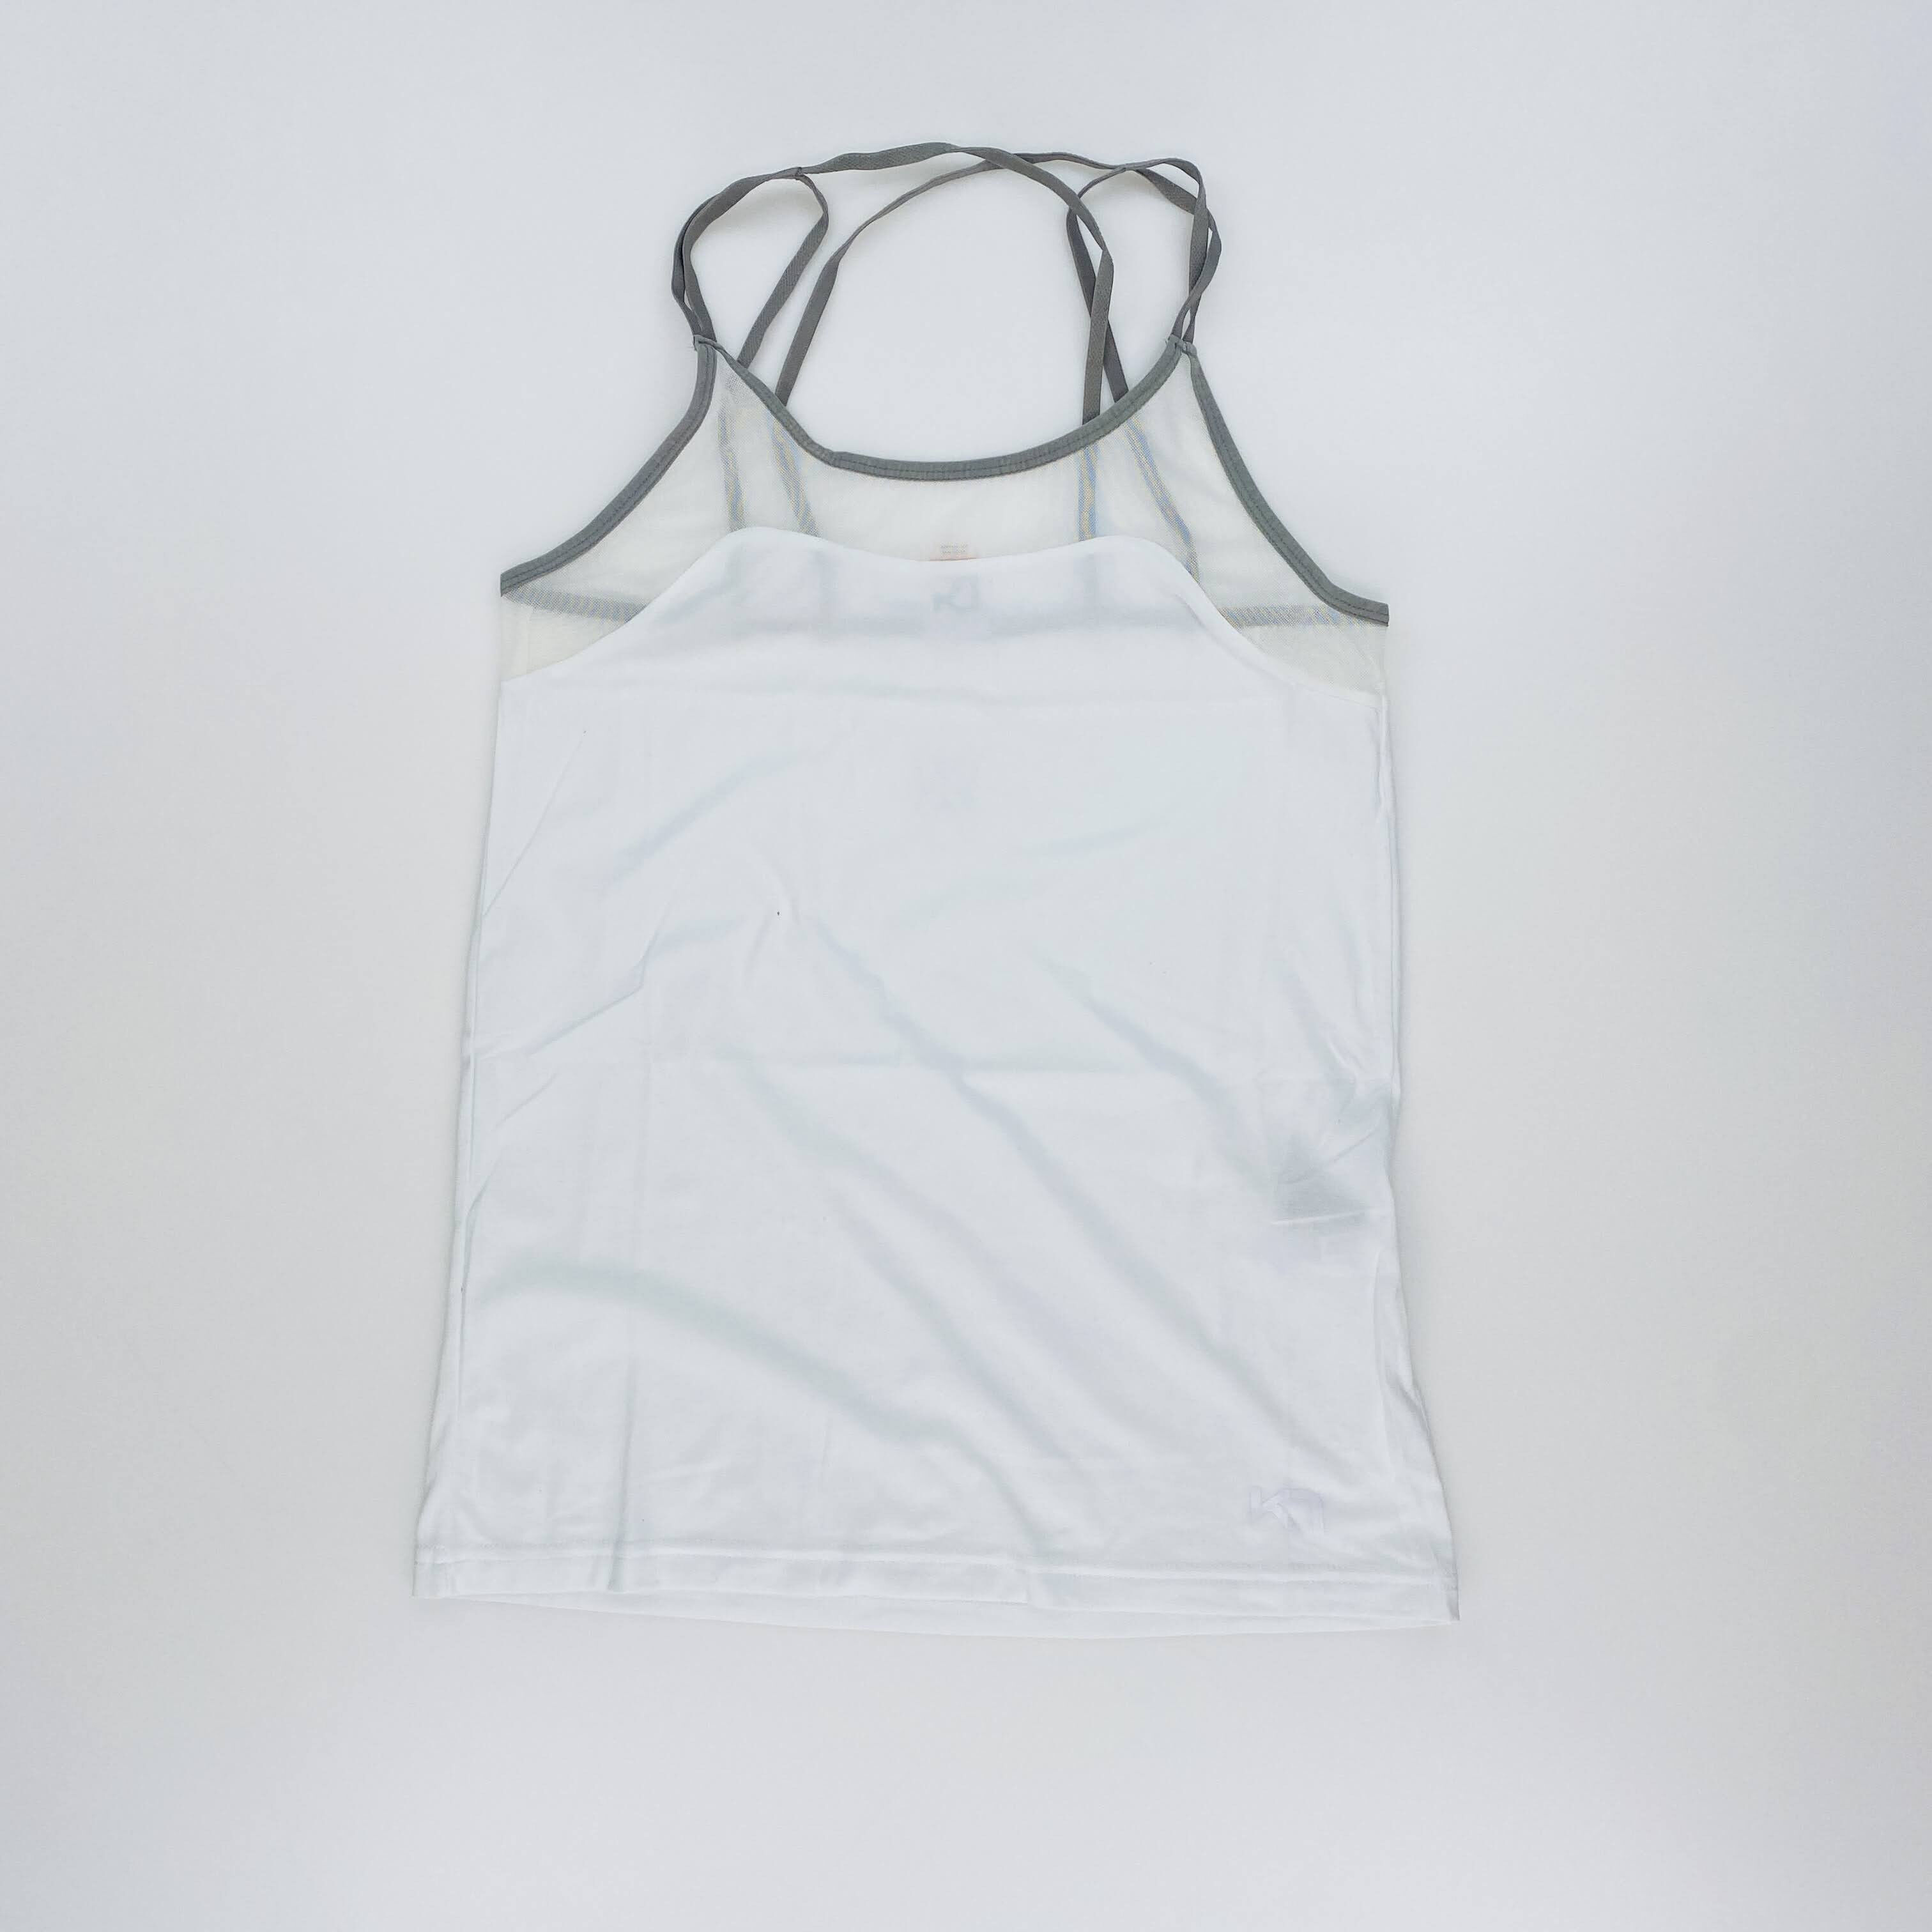 Kari Traa Kine Top - Segunda Mano Camiseta sin mangas - Mujer - Blanco - M | Hardloop